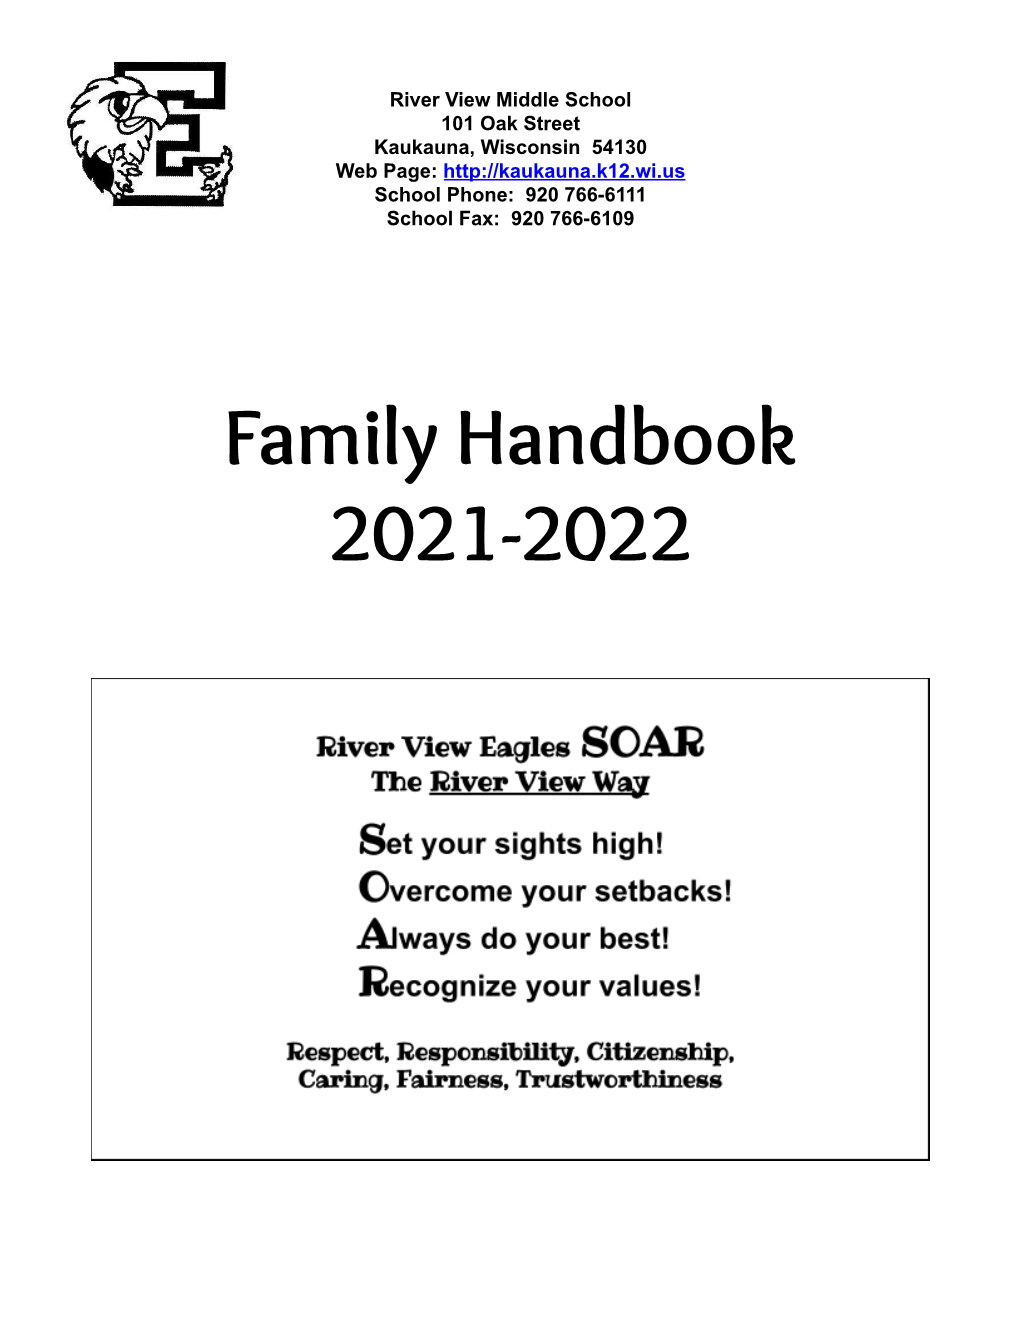 Family Handbook 2021-2022 Dear River View Family